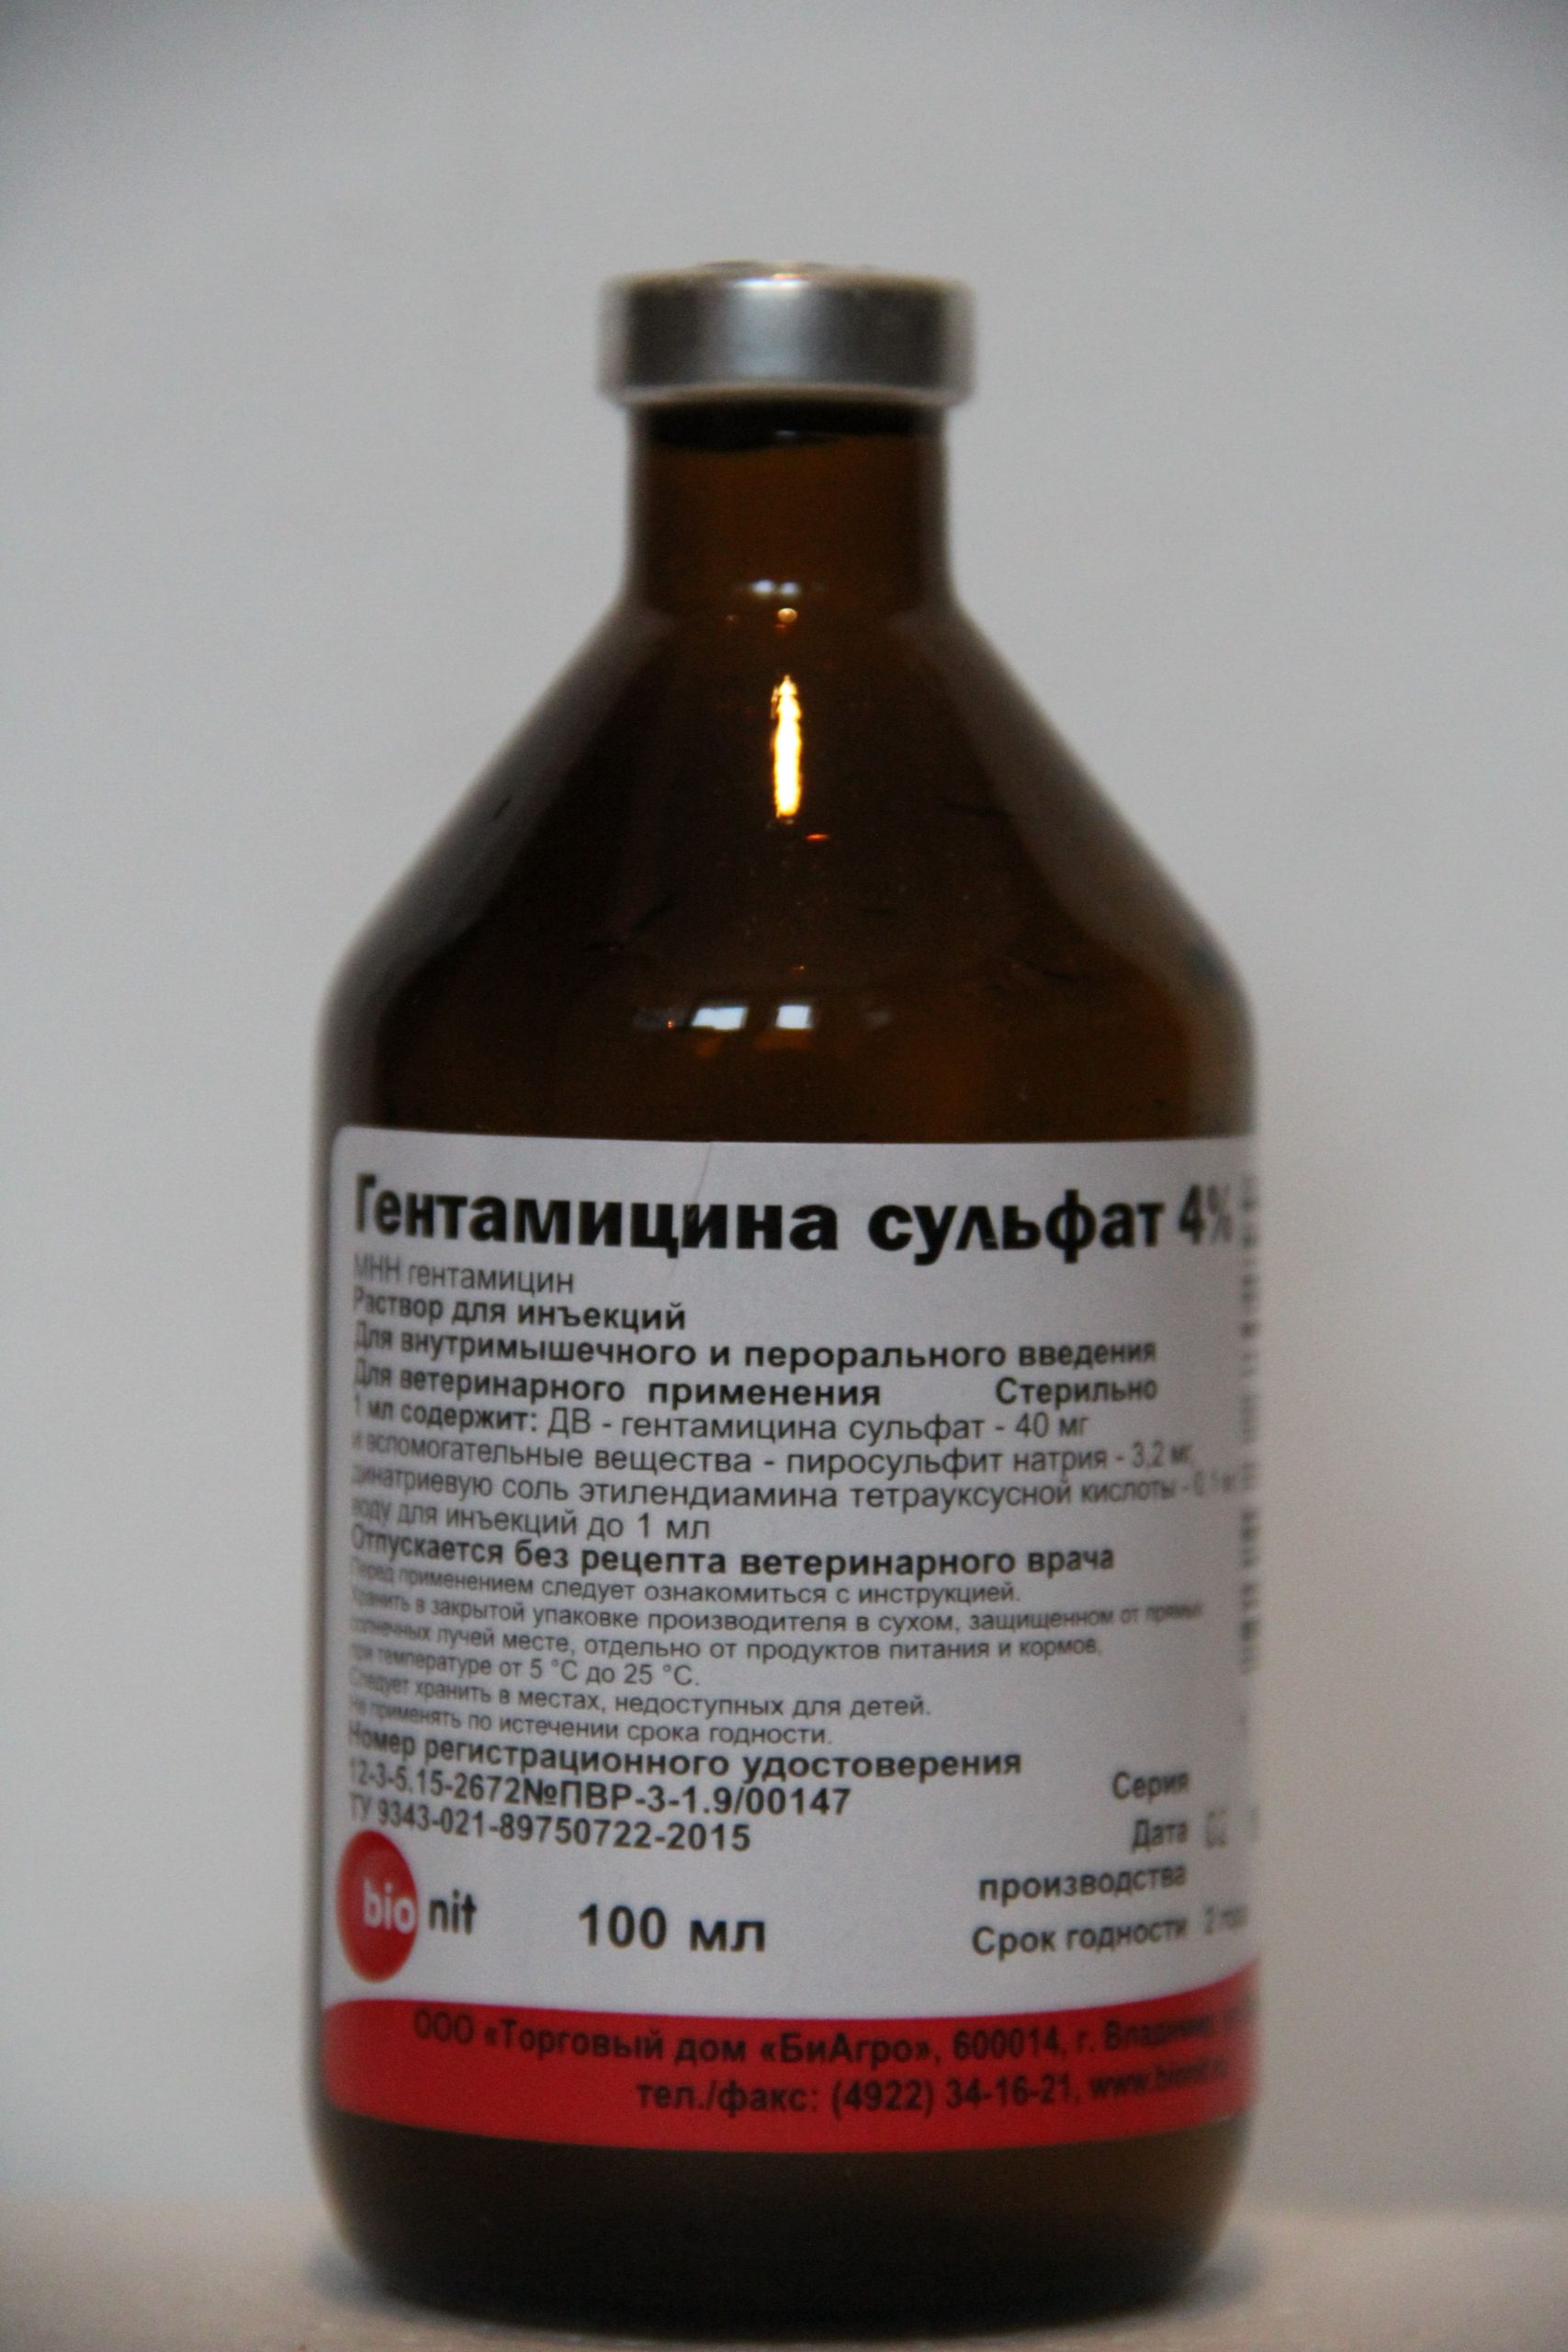 Гентамицина сульфат 4% 100мл - ZooFarm.by